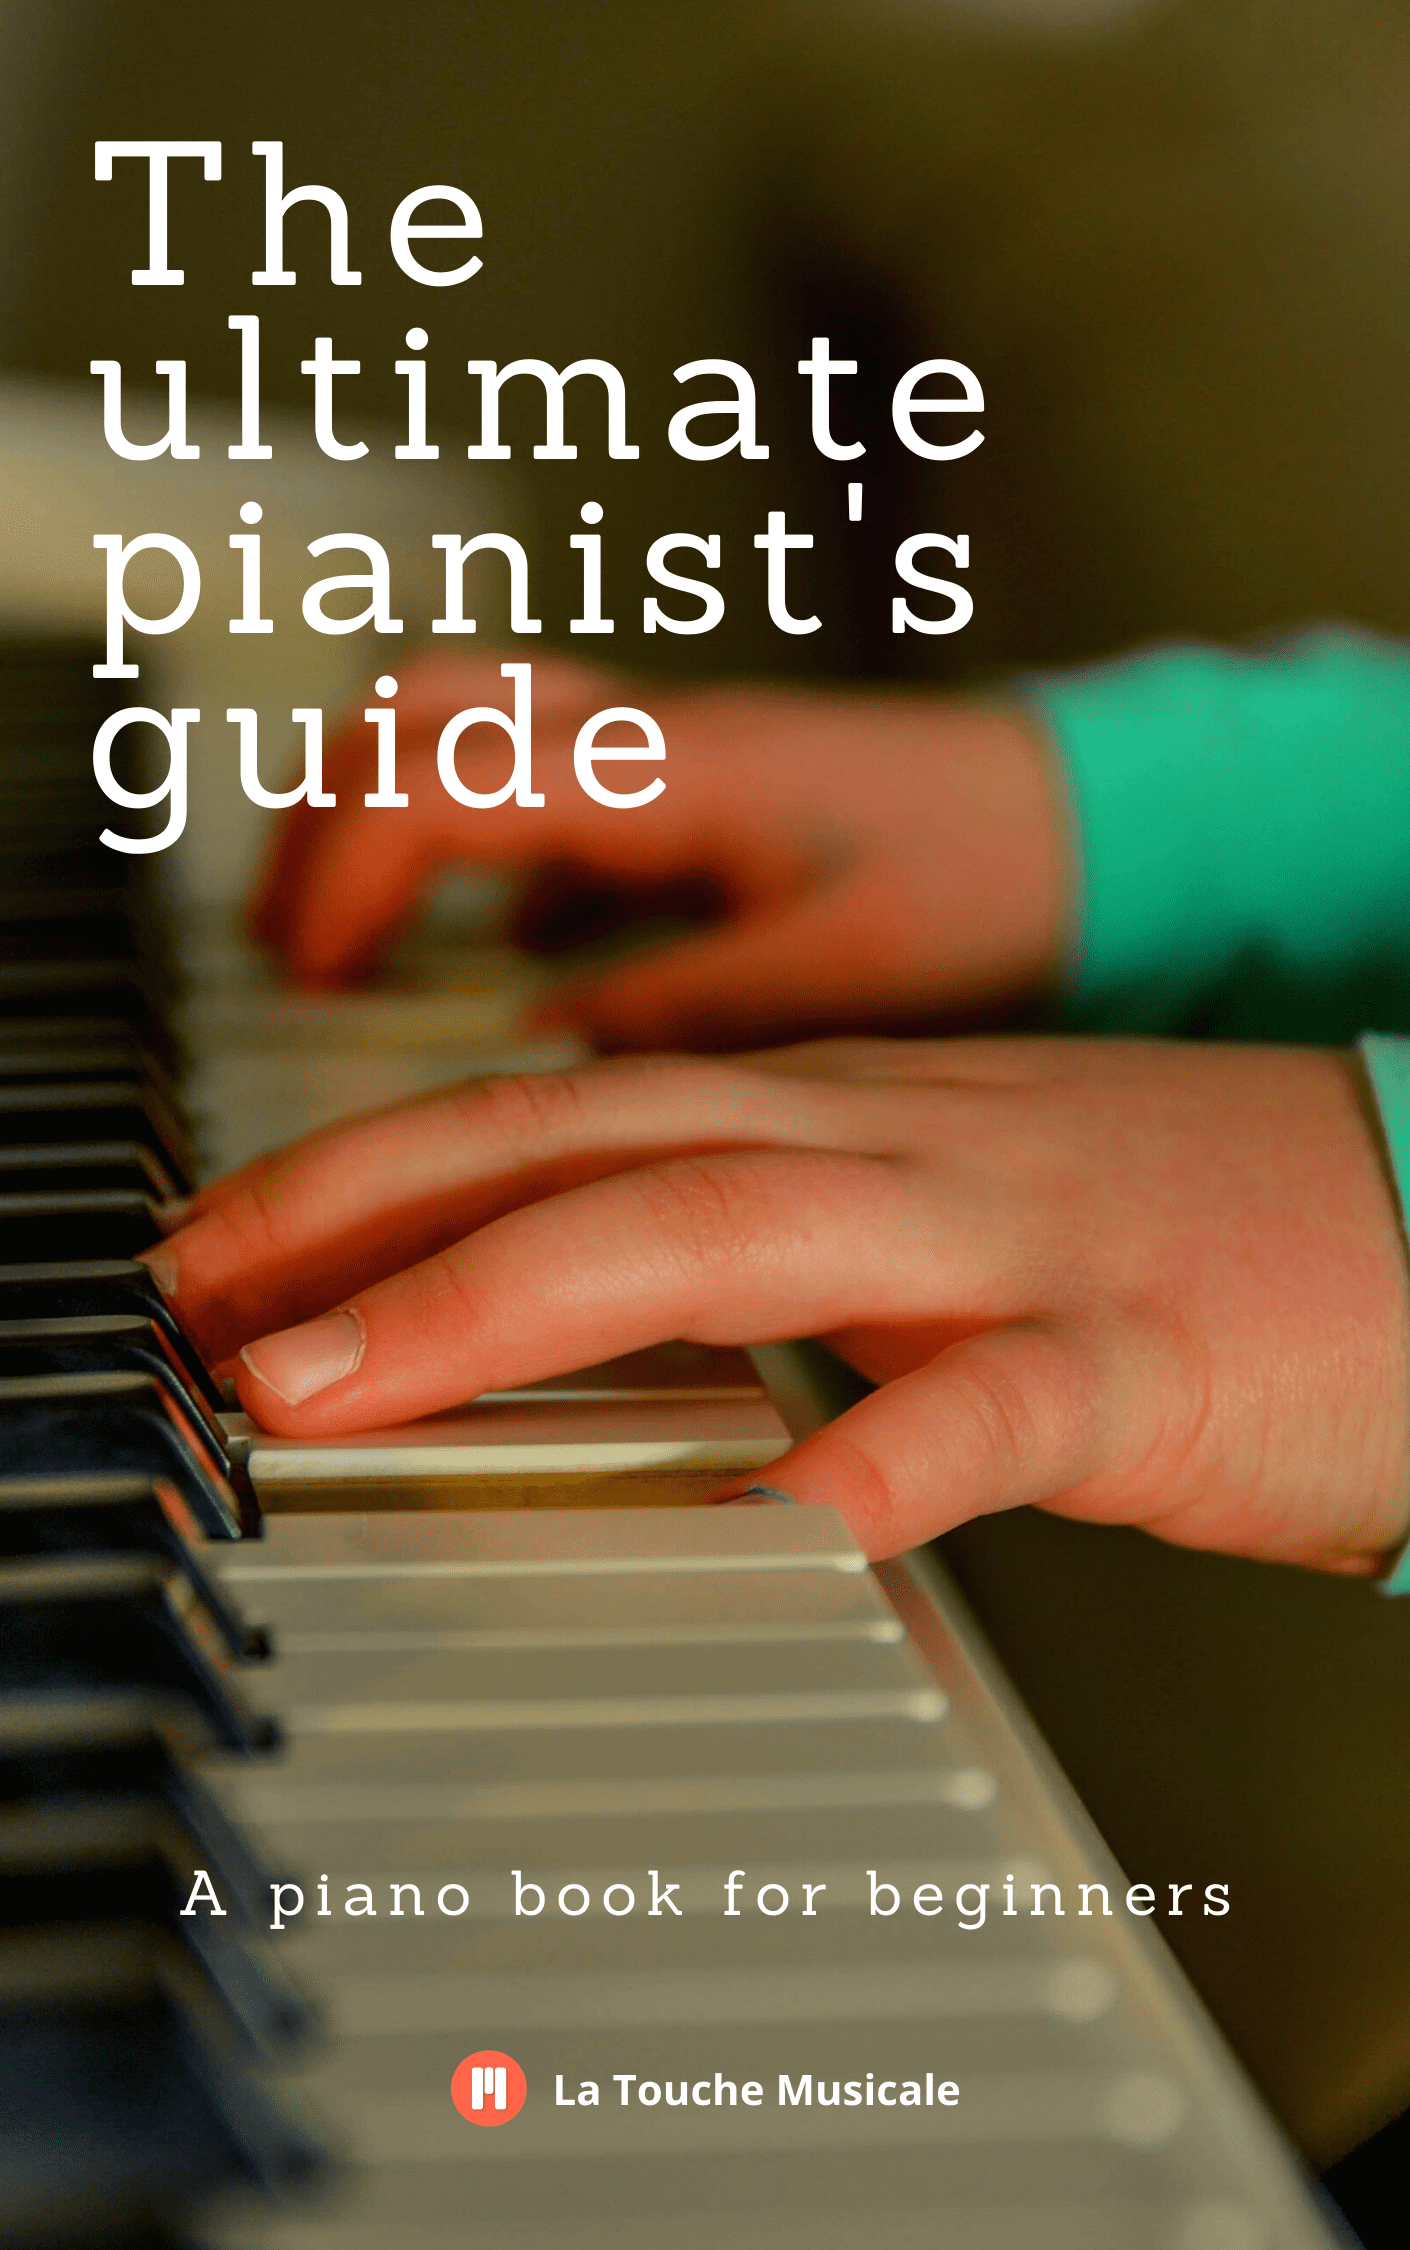 Piquete casual Predecir Libro de piano para principiantes gratis en PDF - La Touche Musicale